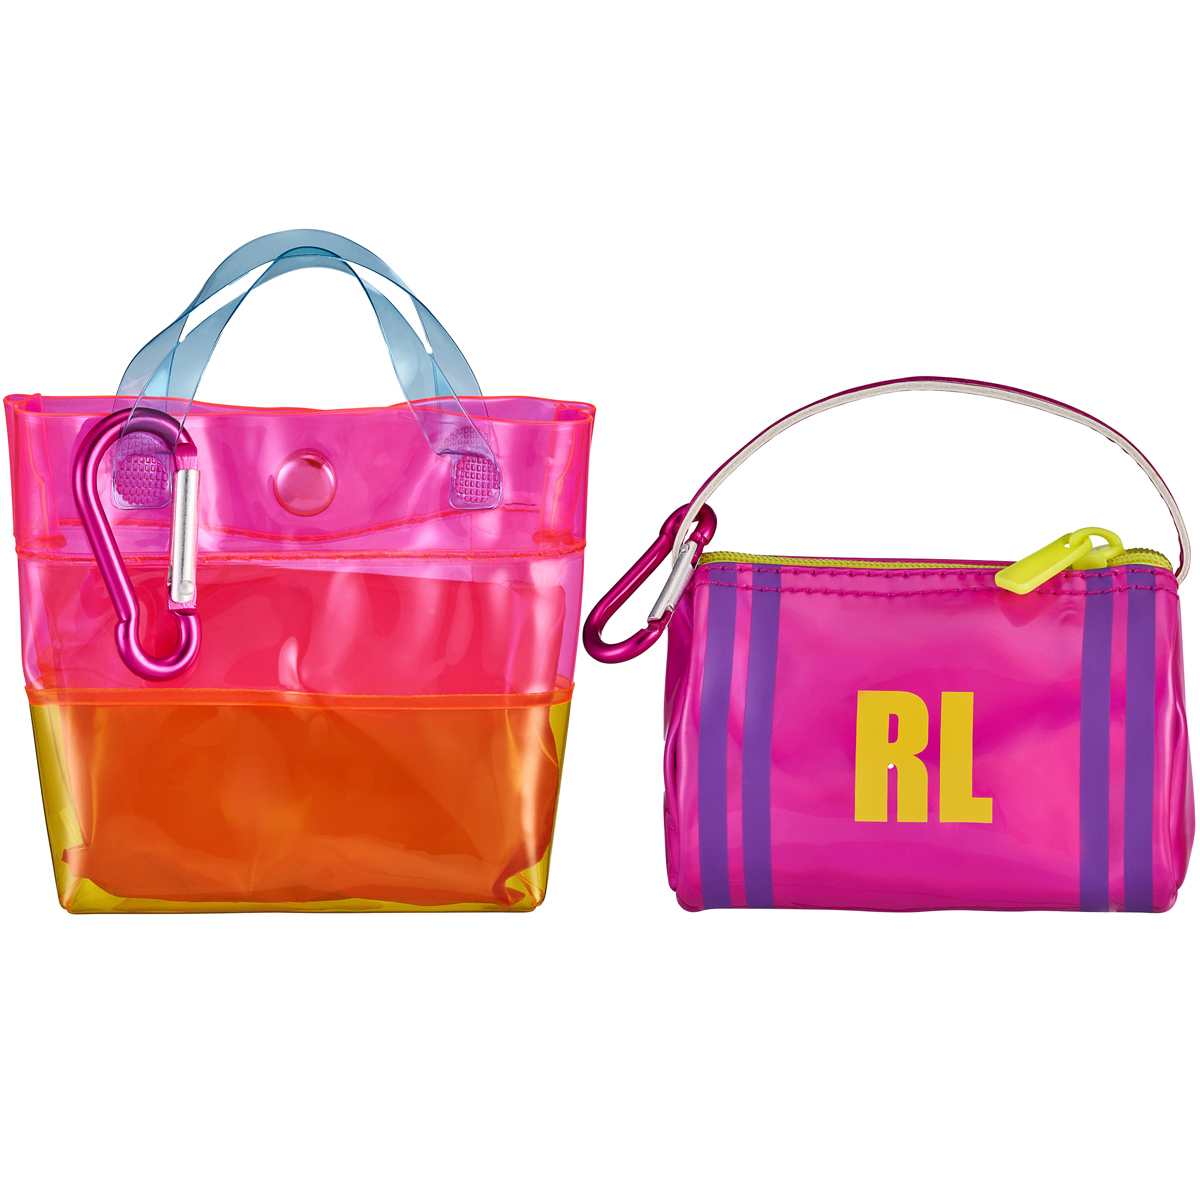  REAL LITTLES - Collectible Micro Handbag Collection